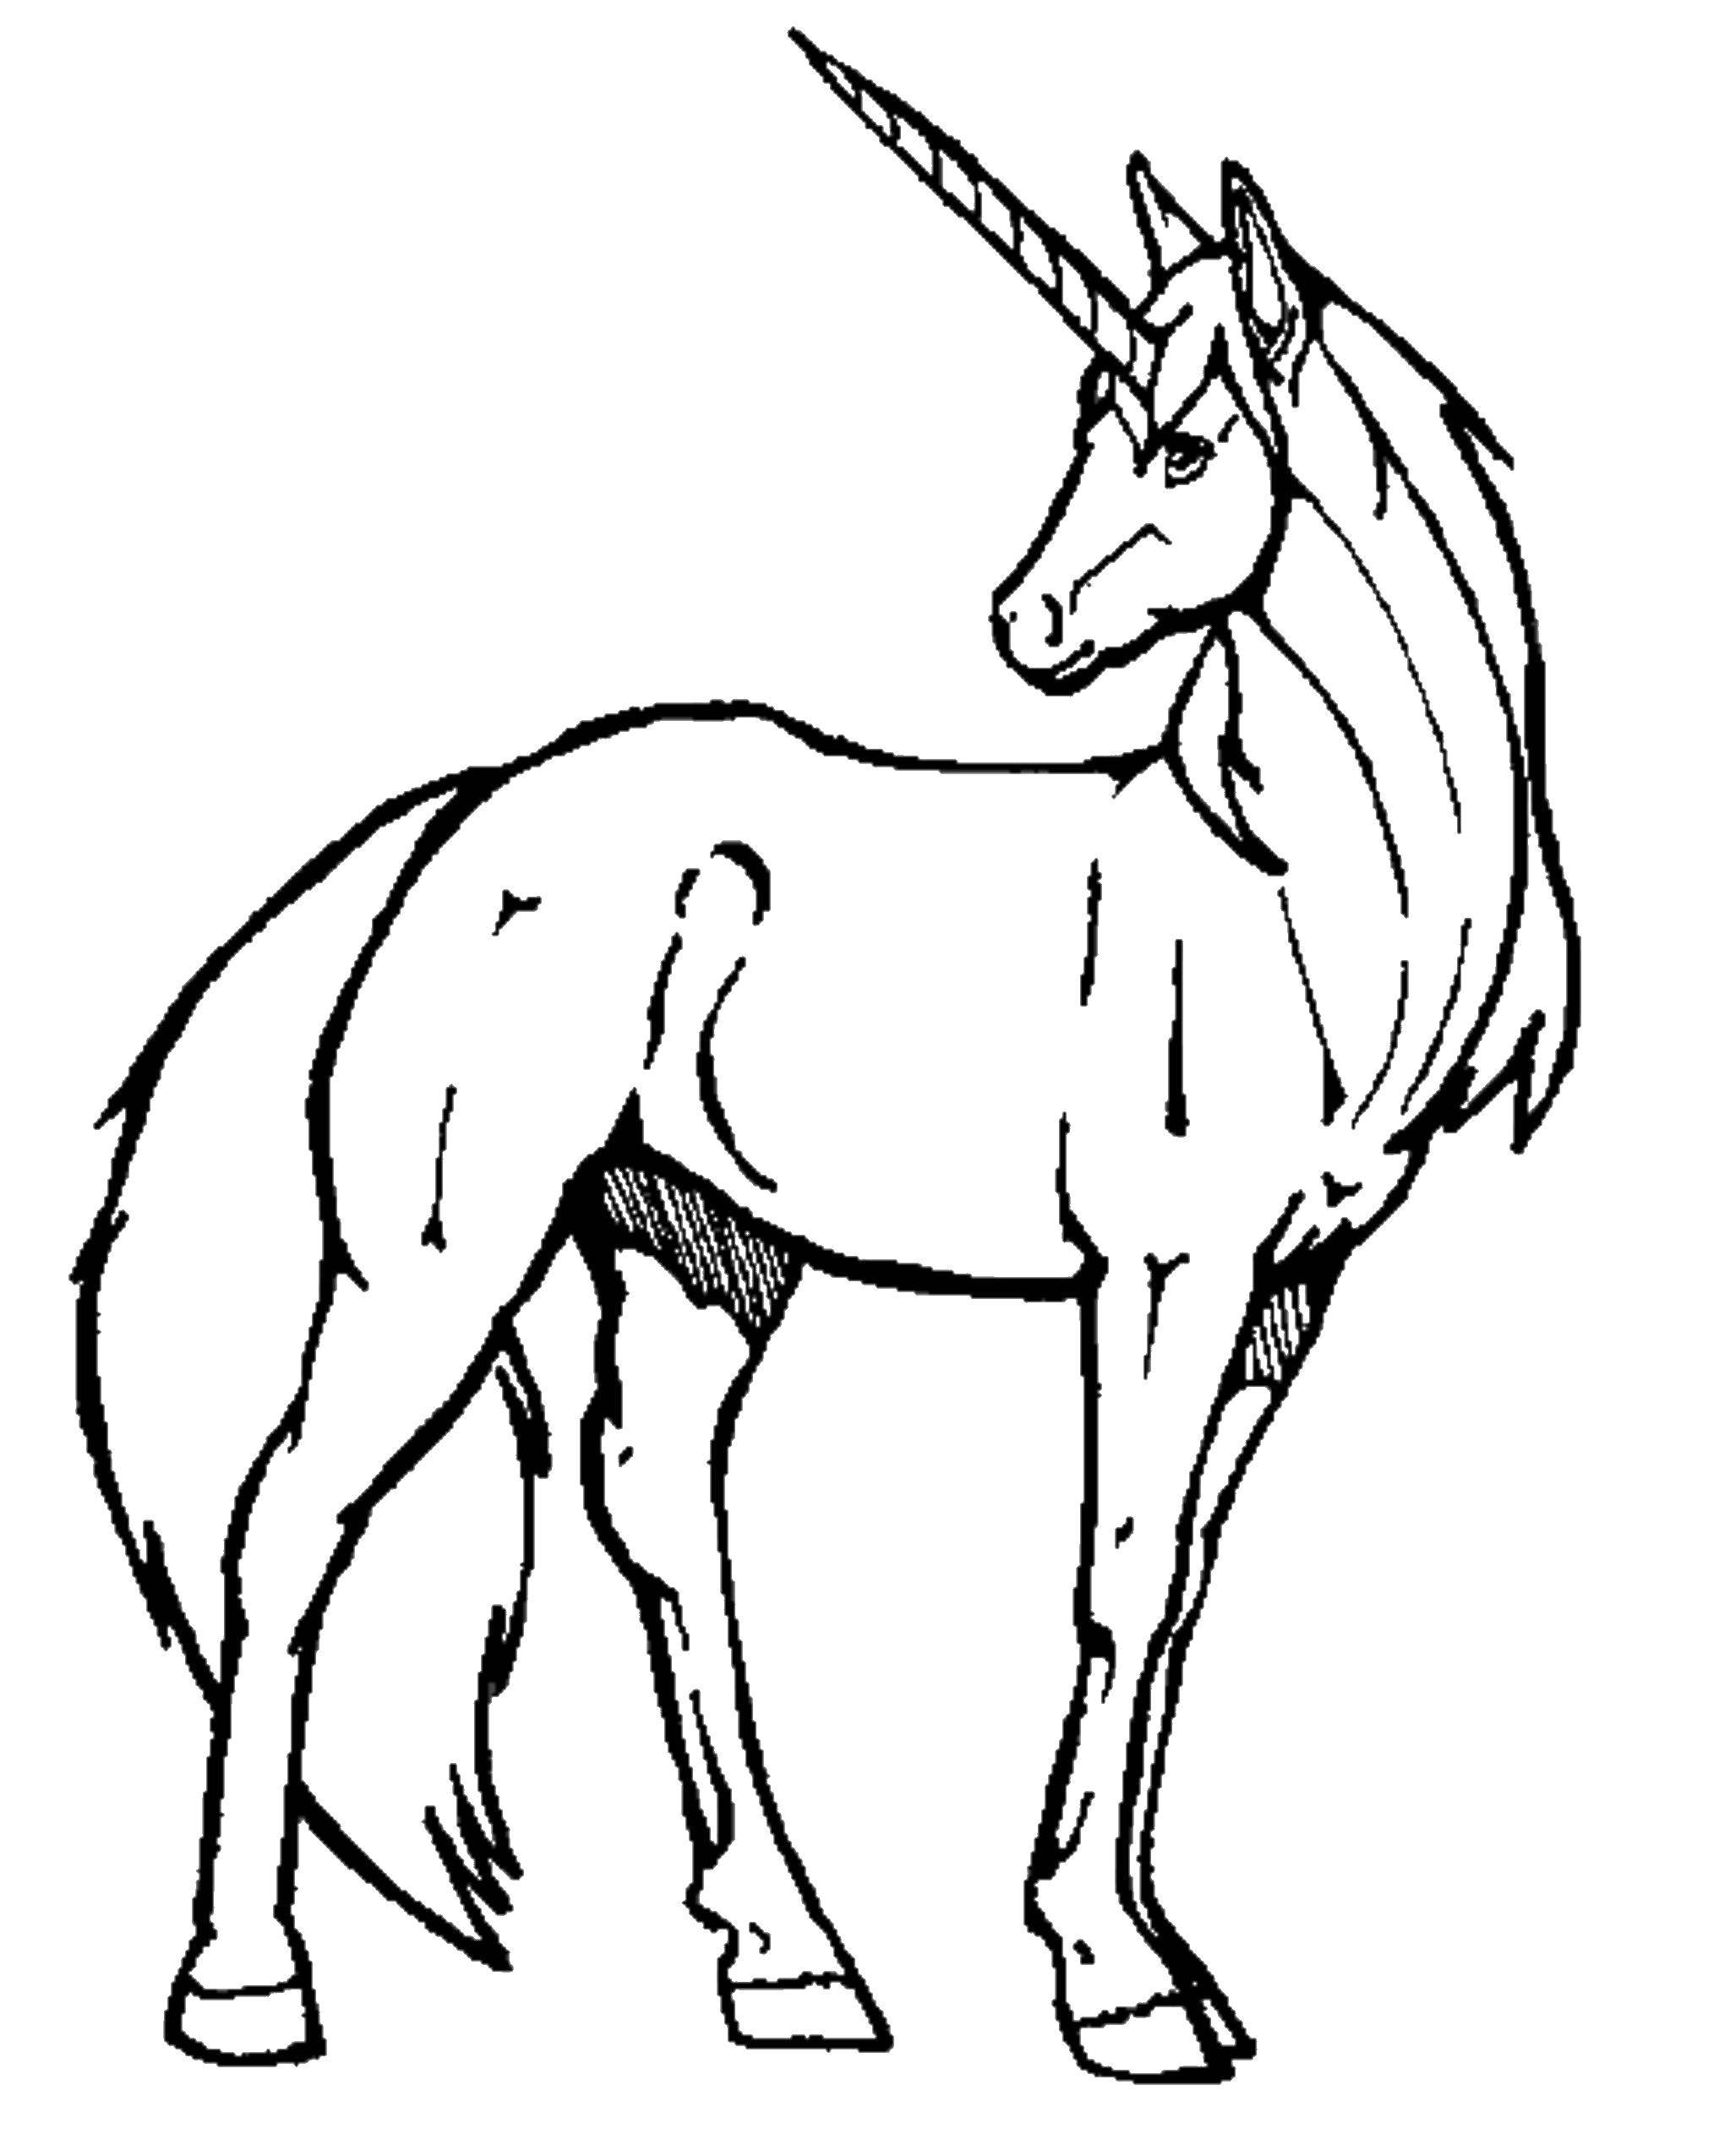 Coloring Unicorn. Category Animals. Tags:  Animals, unicorn.